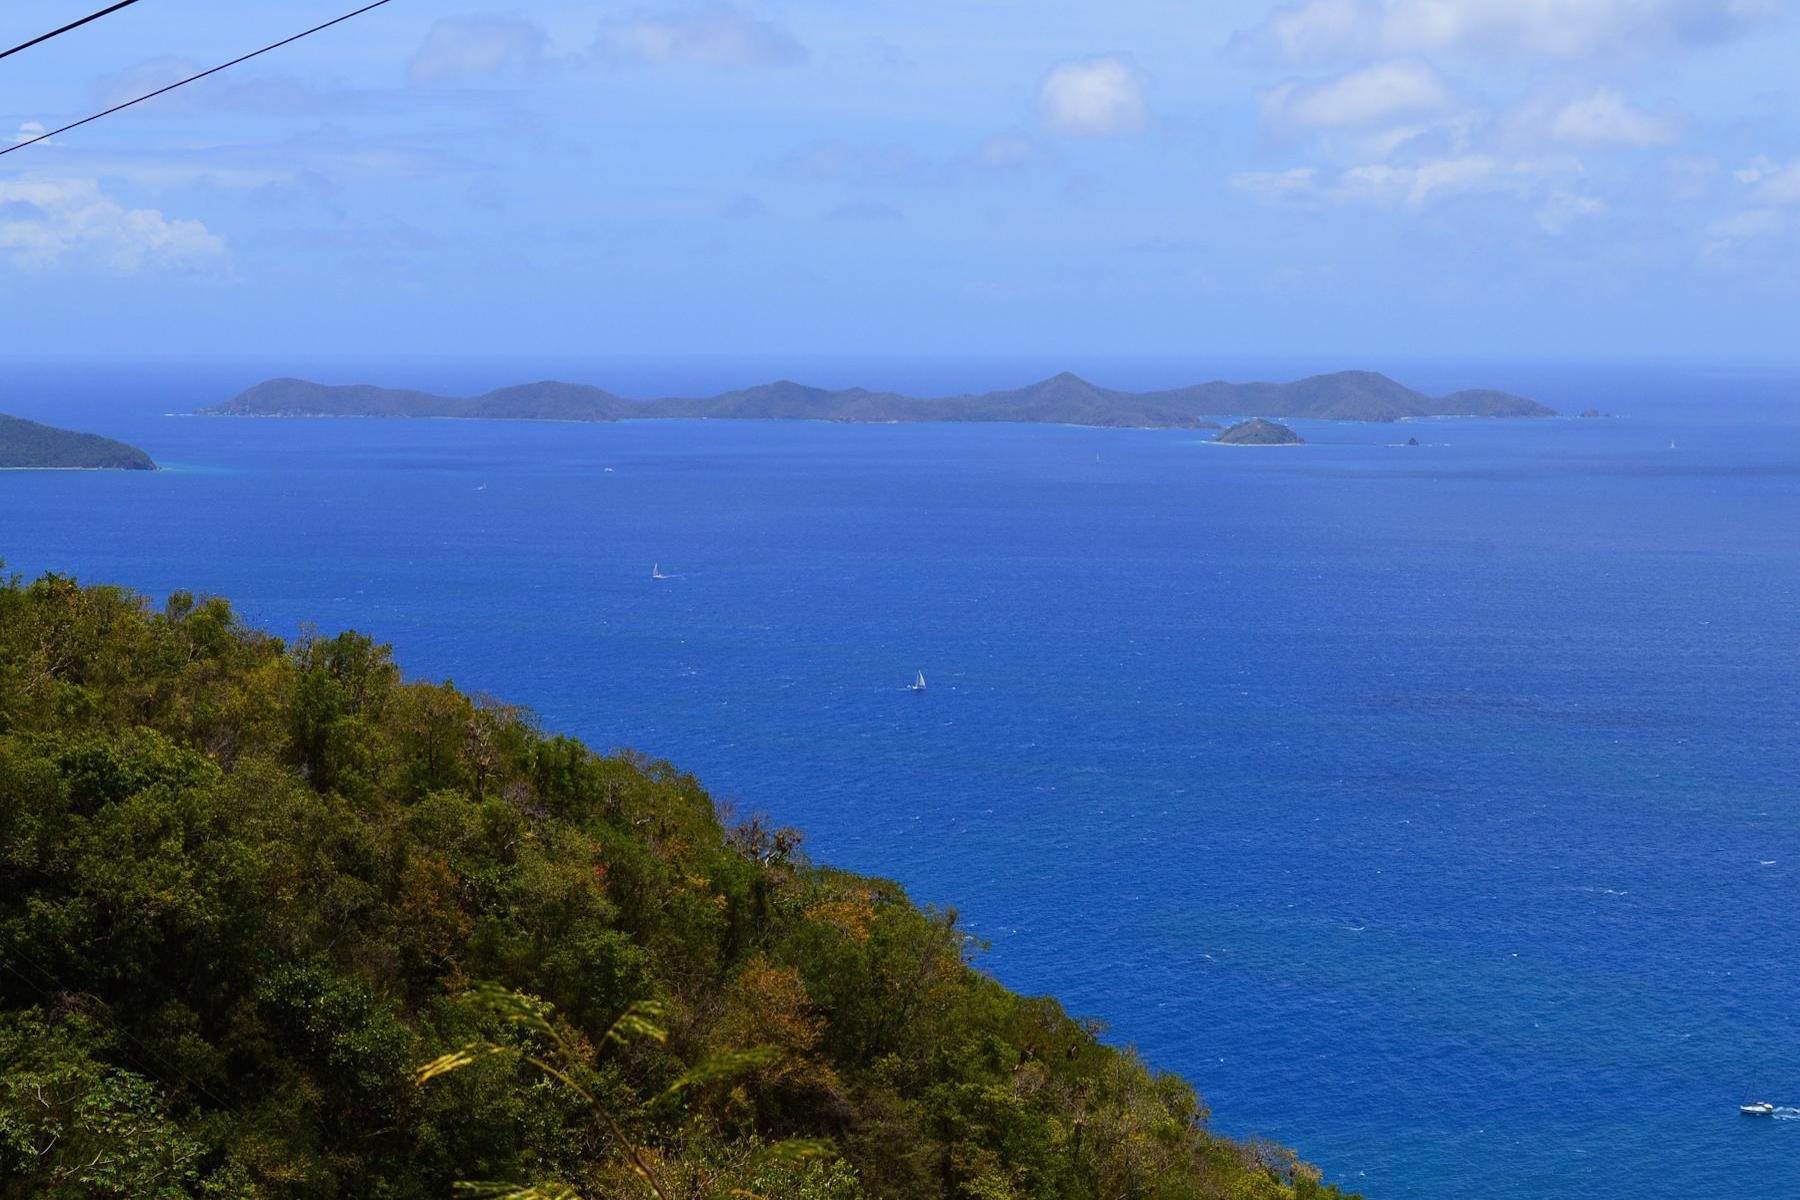 2. Terreno para Venda às Havers, Tortola Ilhas Virgens Britânicas